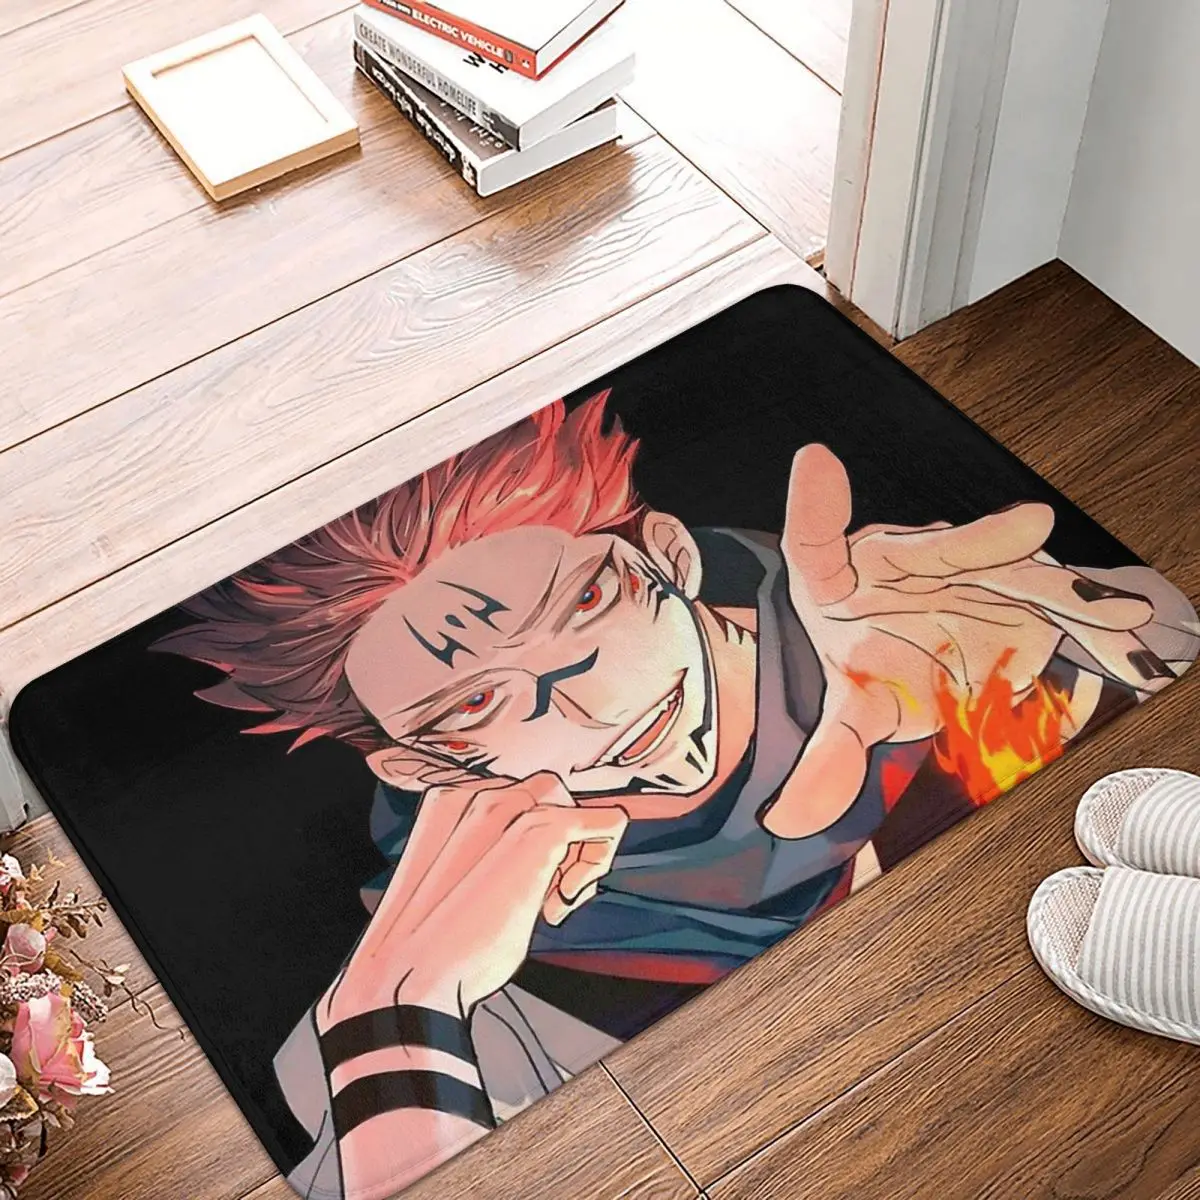 

Jujutsu Kaisen Juvenile Animation Non-slip Doormat Living Room Mat Fire Floor Carpet Welcome Rug Bedroom Decorative